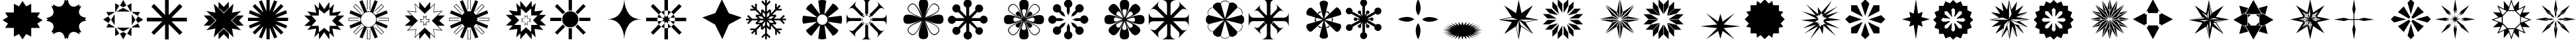 Пример написания английского алфавита шрифтом Stars1